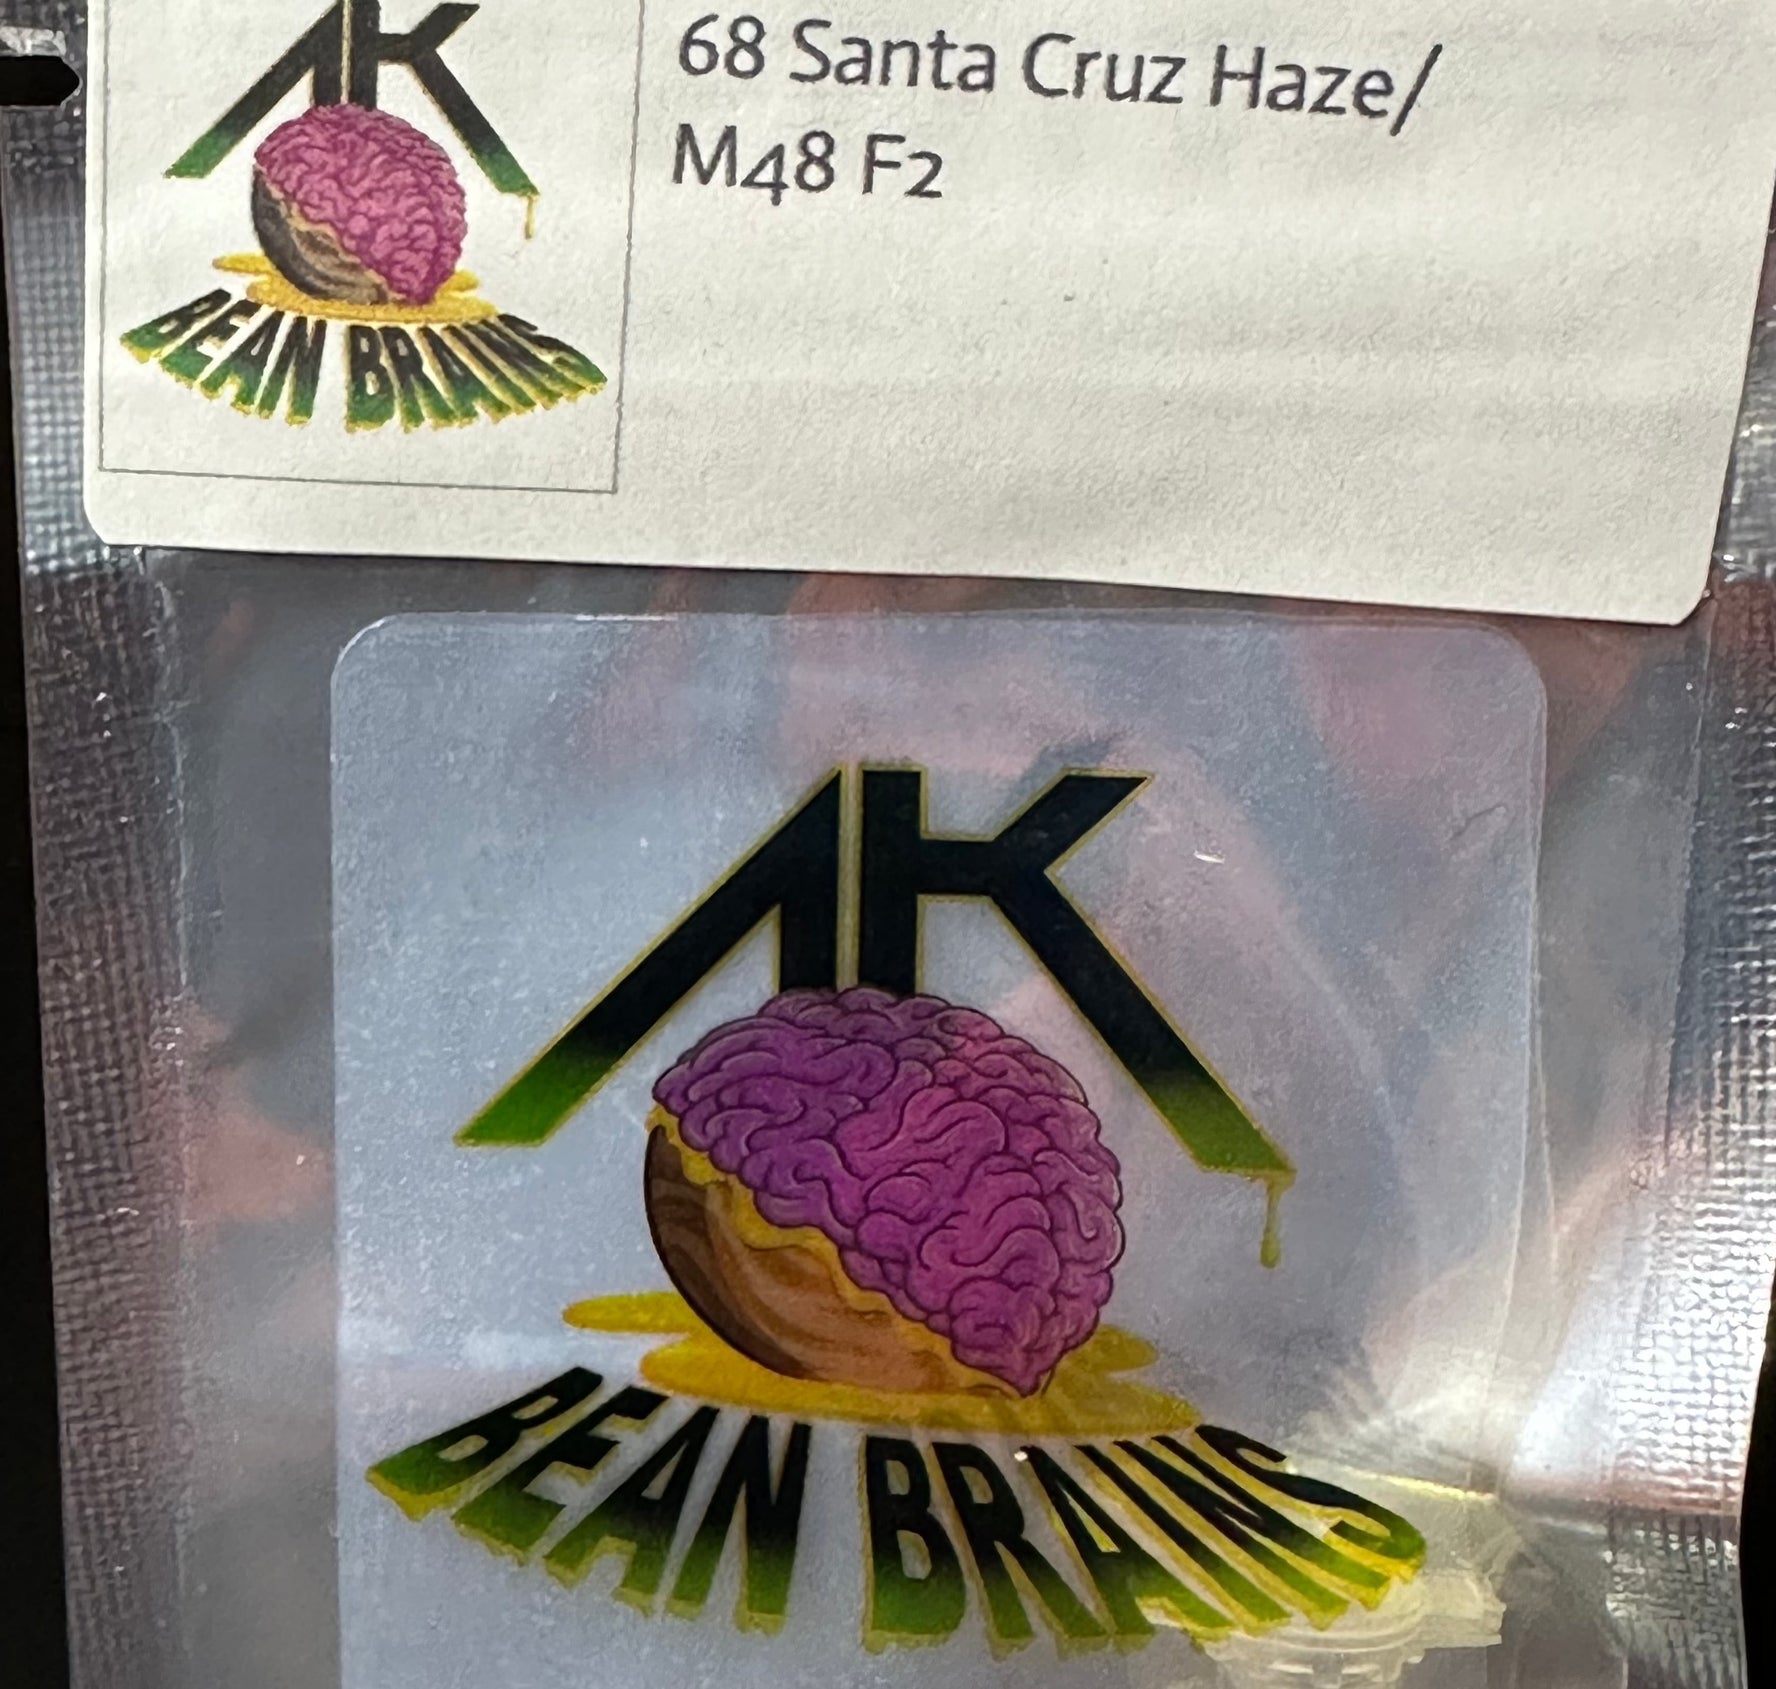 AK Bean Brains - 68 Santa Cruz Haze/M48 F2